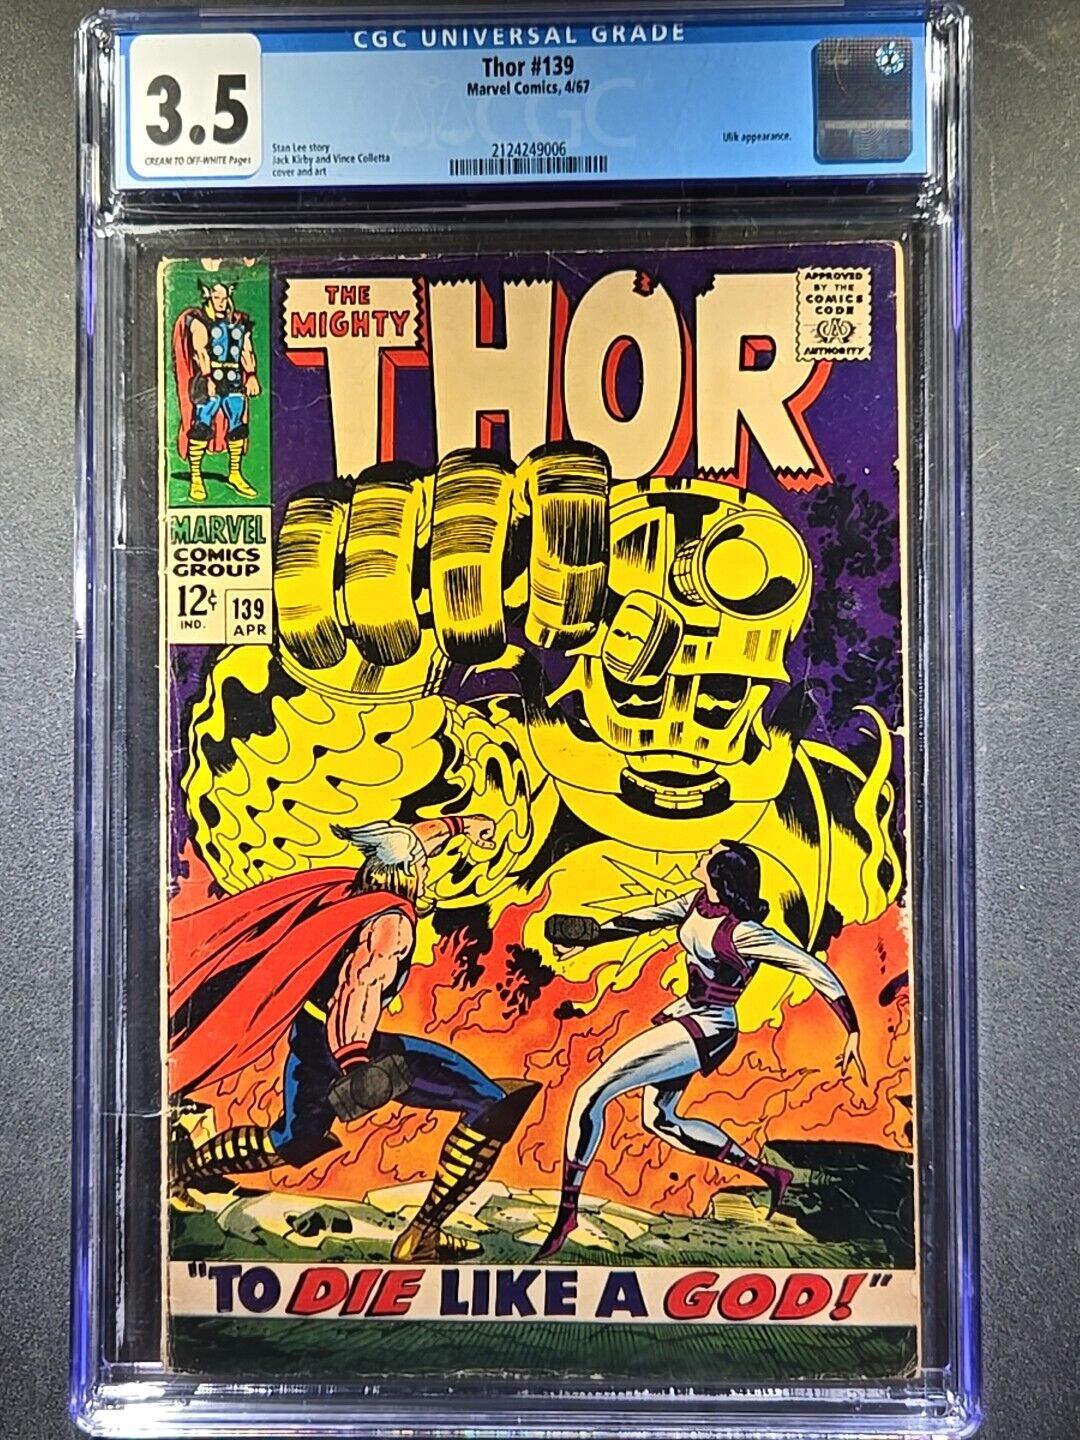 1967 THOR #139 - Ulik appearance - Marvel Comics - CGC 3.5